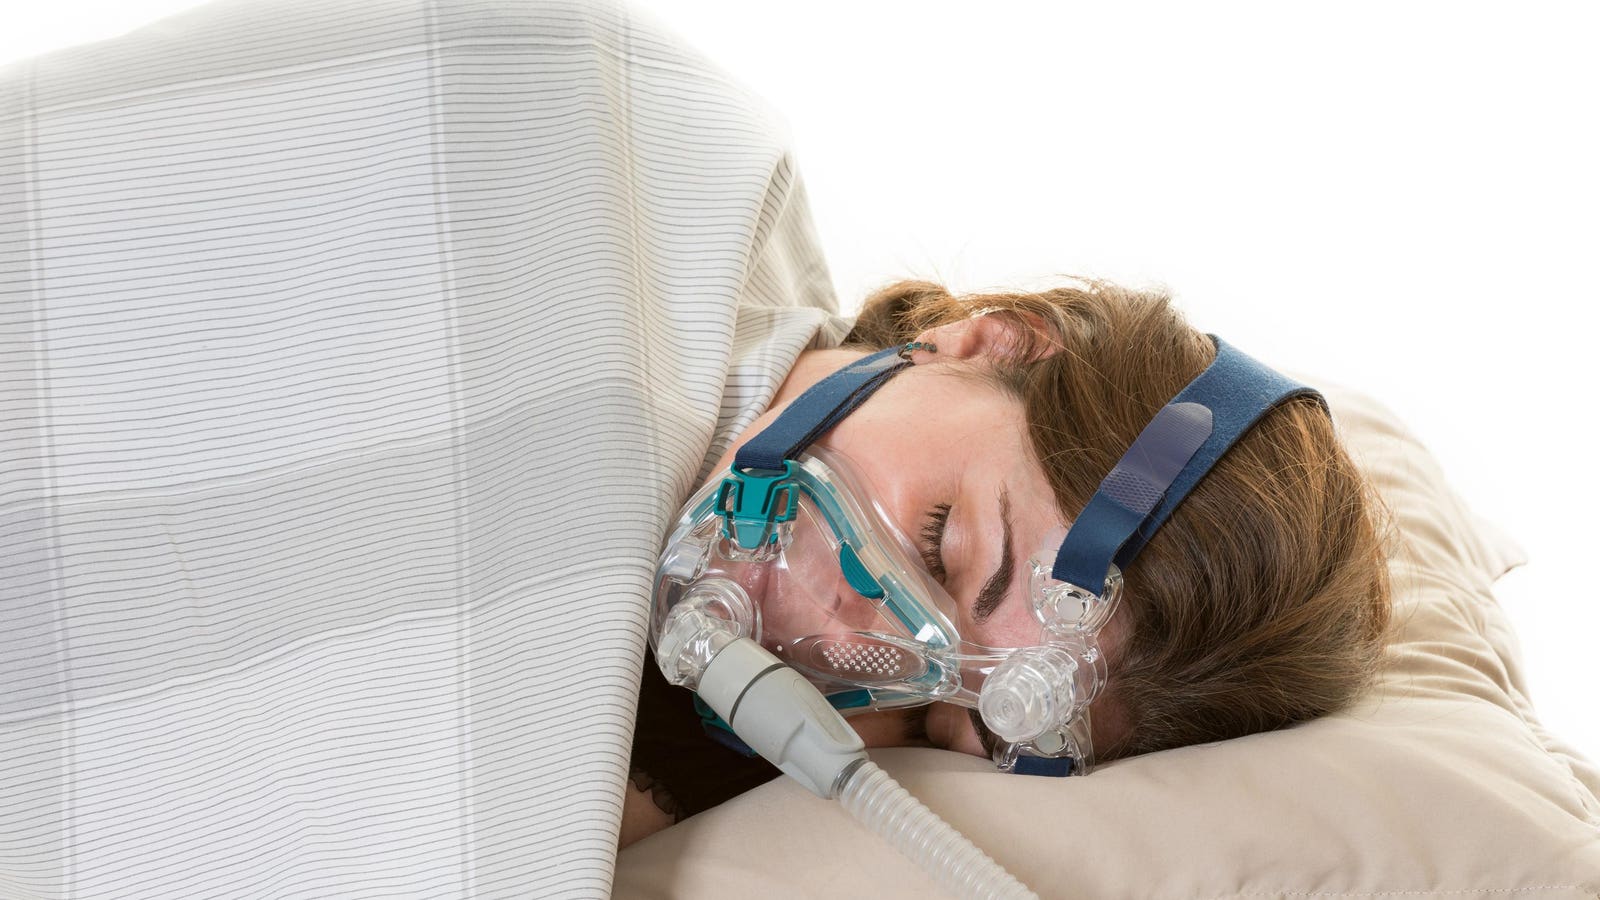 Mounjaro Drug Tirzepatide Could Treat Sleep Apnea, Study Finds